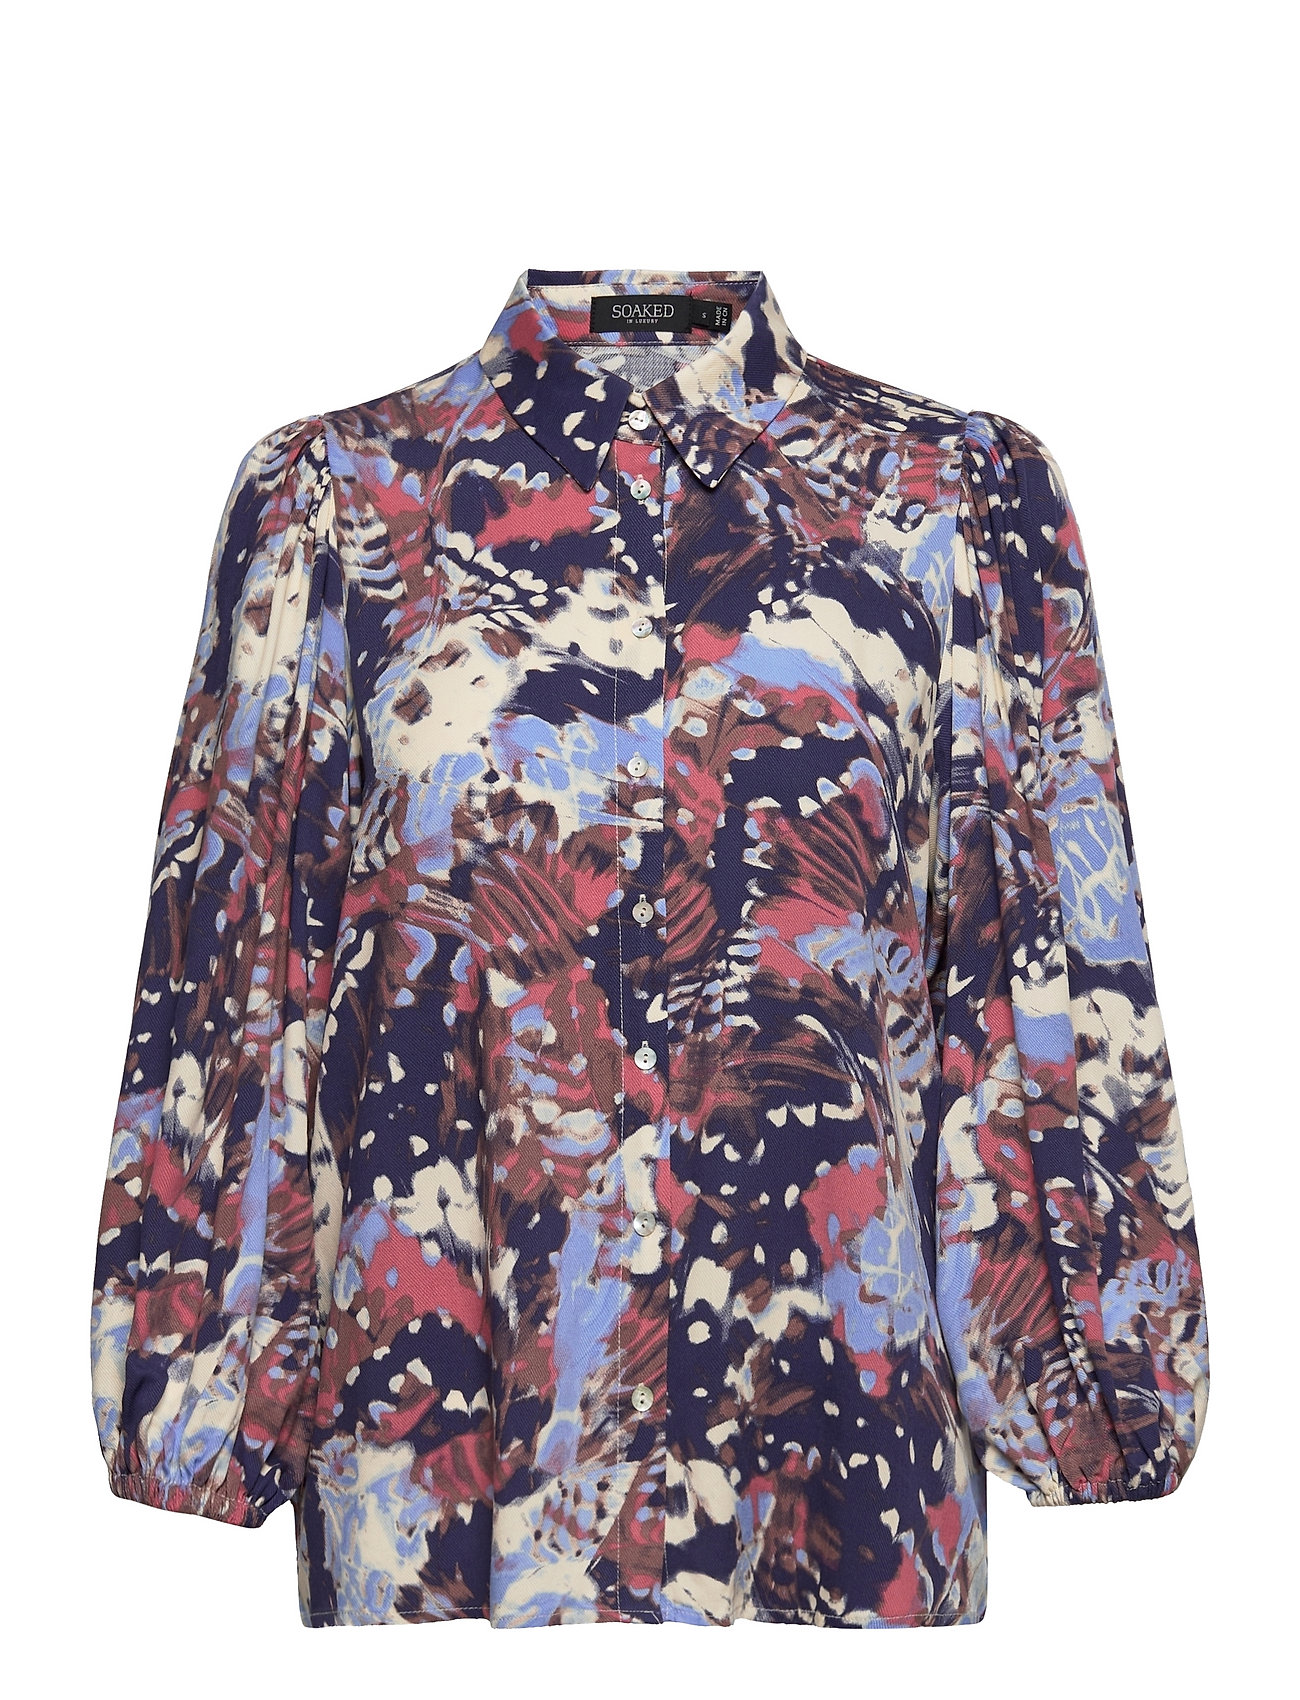 Slmayana Stefani Shirt Tops Shirts Long-sleeved Multi/patterned Soaked In Luxury